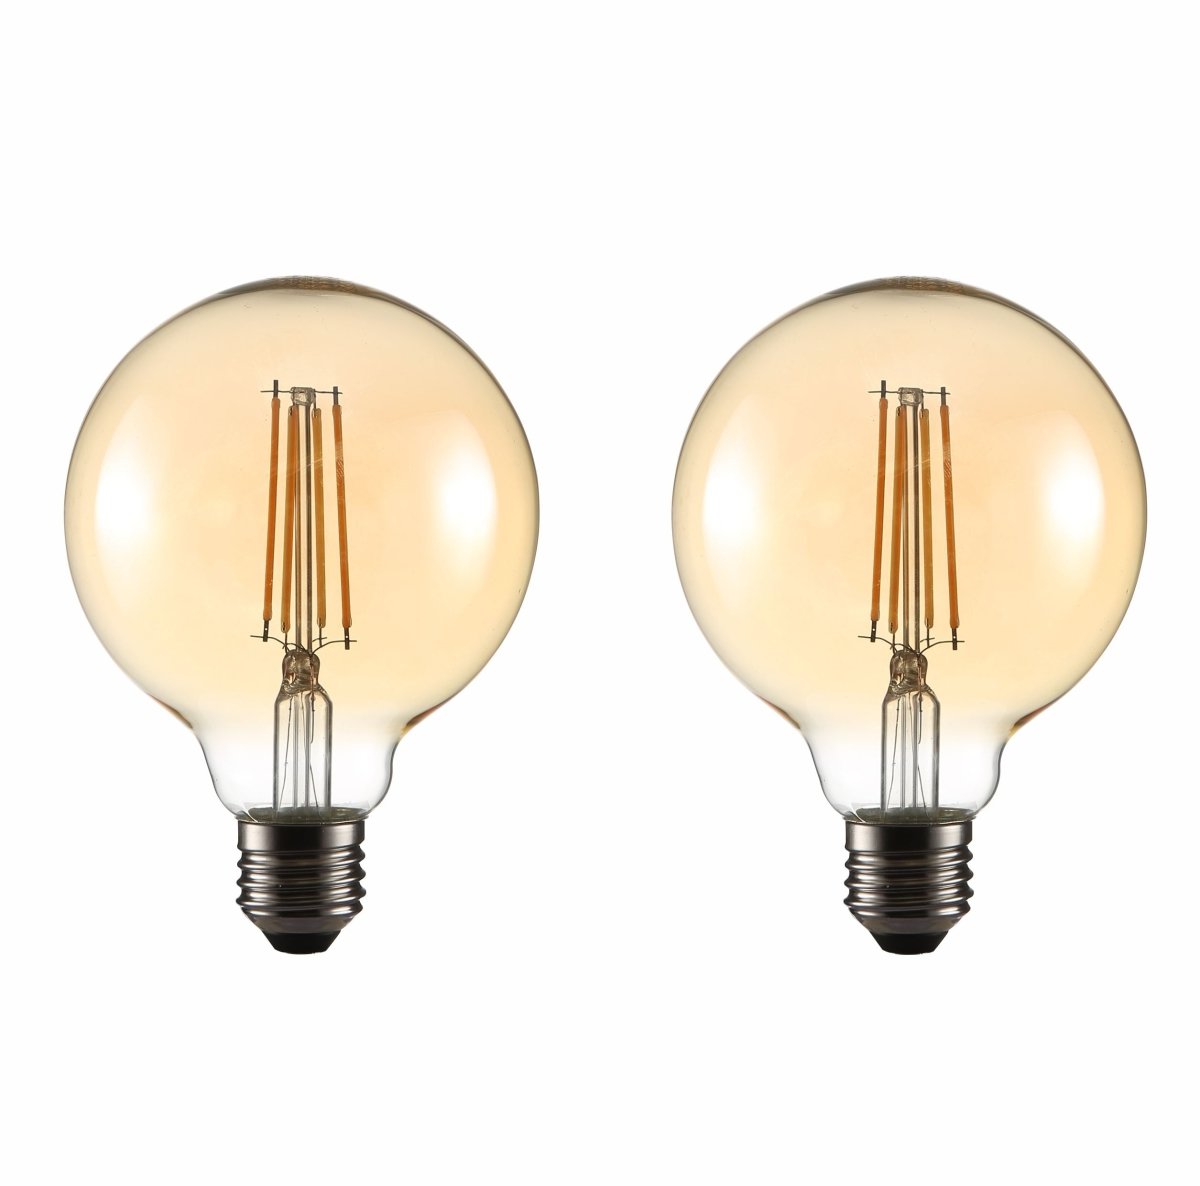 LED Filament Globe Bulb E27 Edison Screw Warm White 2400K G95 6.5w pack of 2